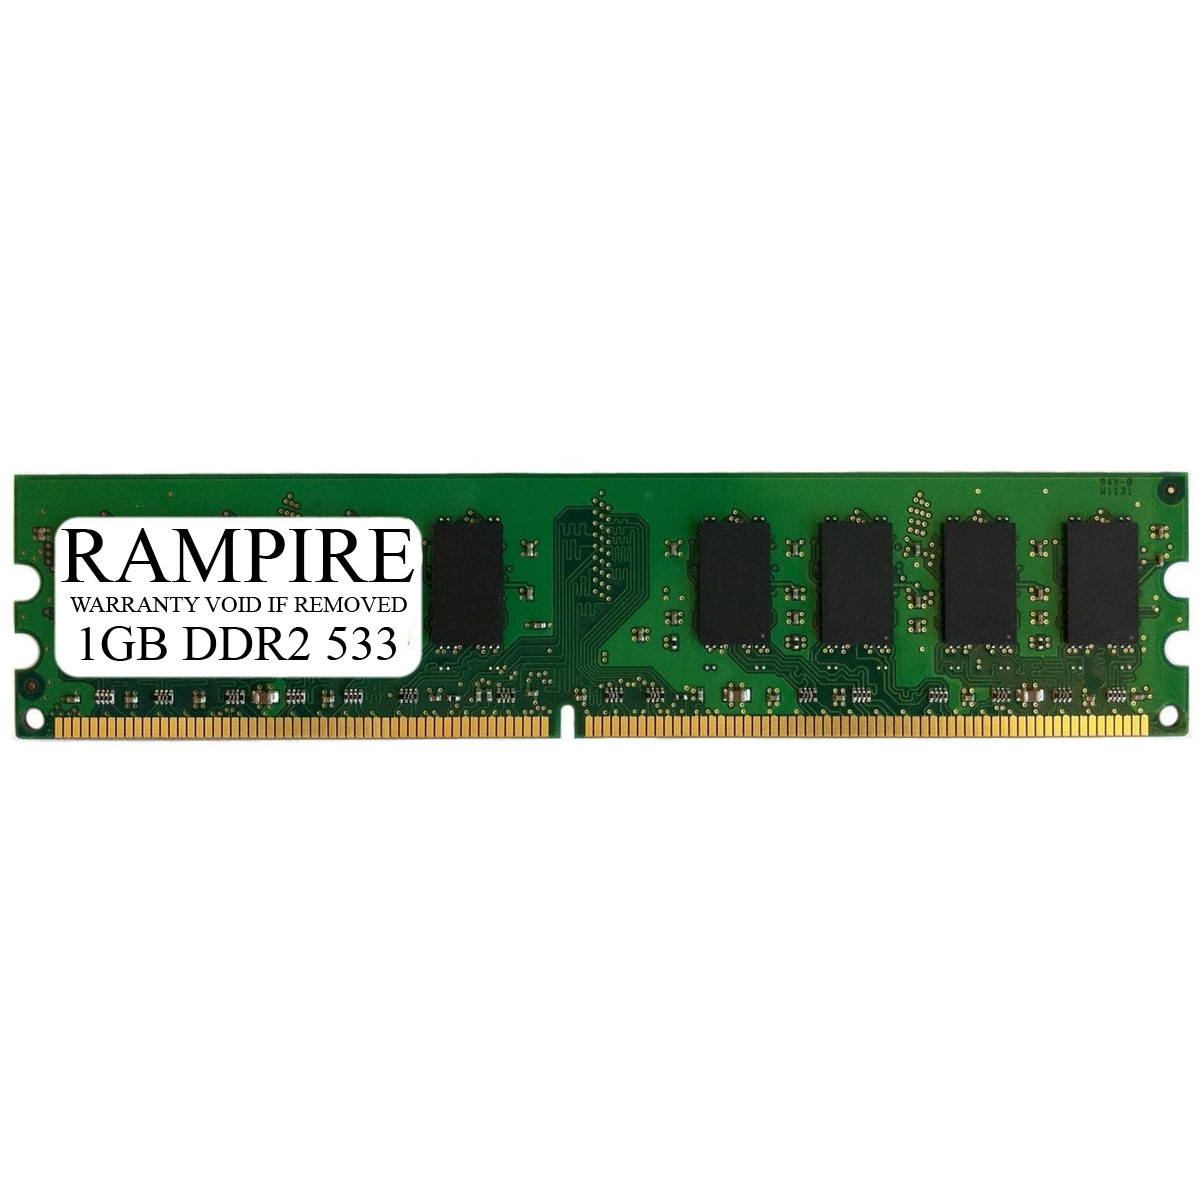 RAMPIRE 1GB DDR2 533 (PC2 4200) 240-Pin DDR2 SDRAM 1.8V 2Rx8 Non-ECC UDIMM Memory for Desktop PC